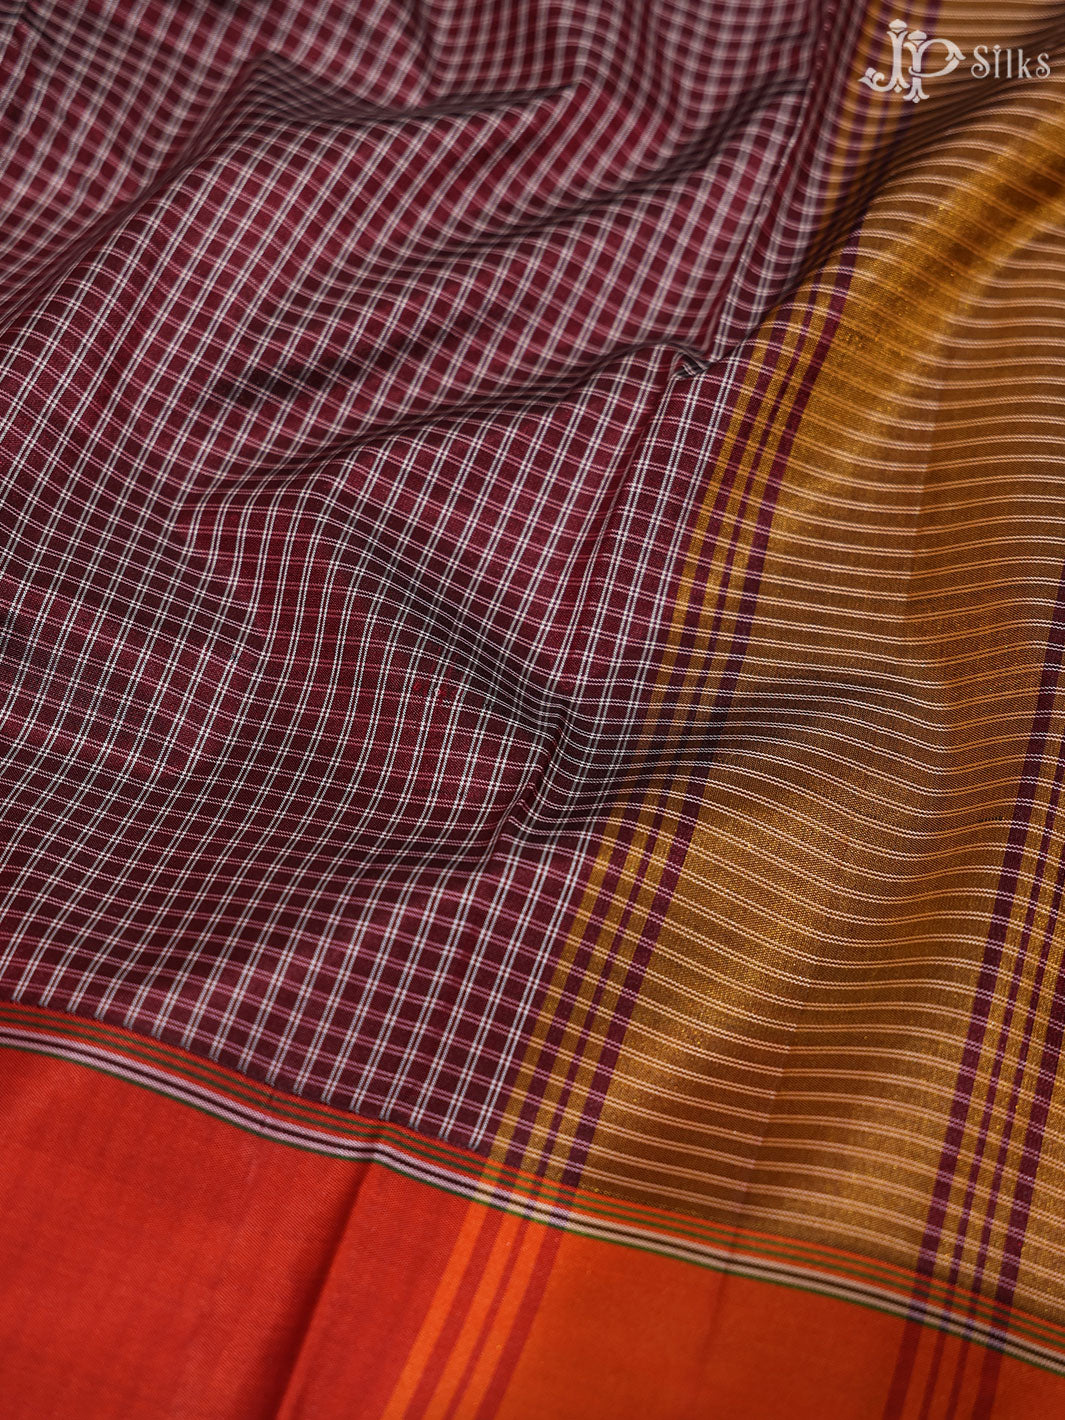 Multicolor Small Checks Dharmavaram silk -  A10315 - View 5